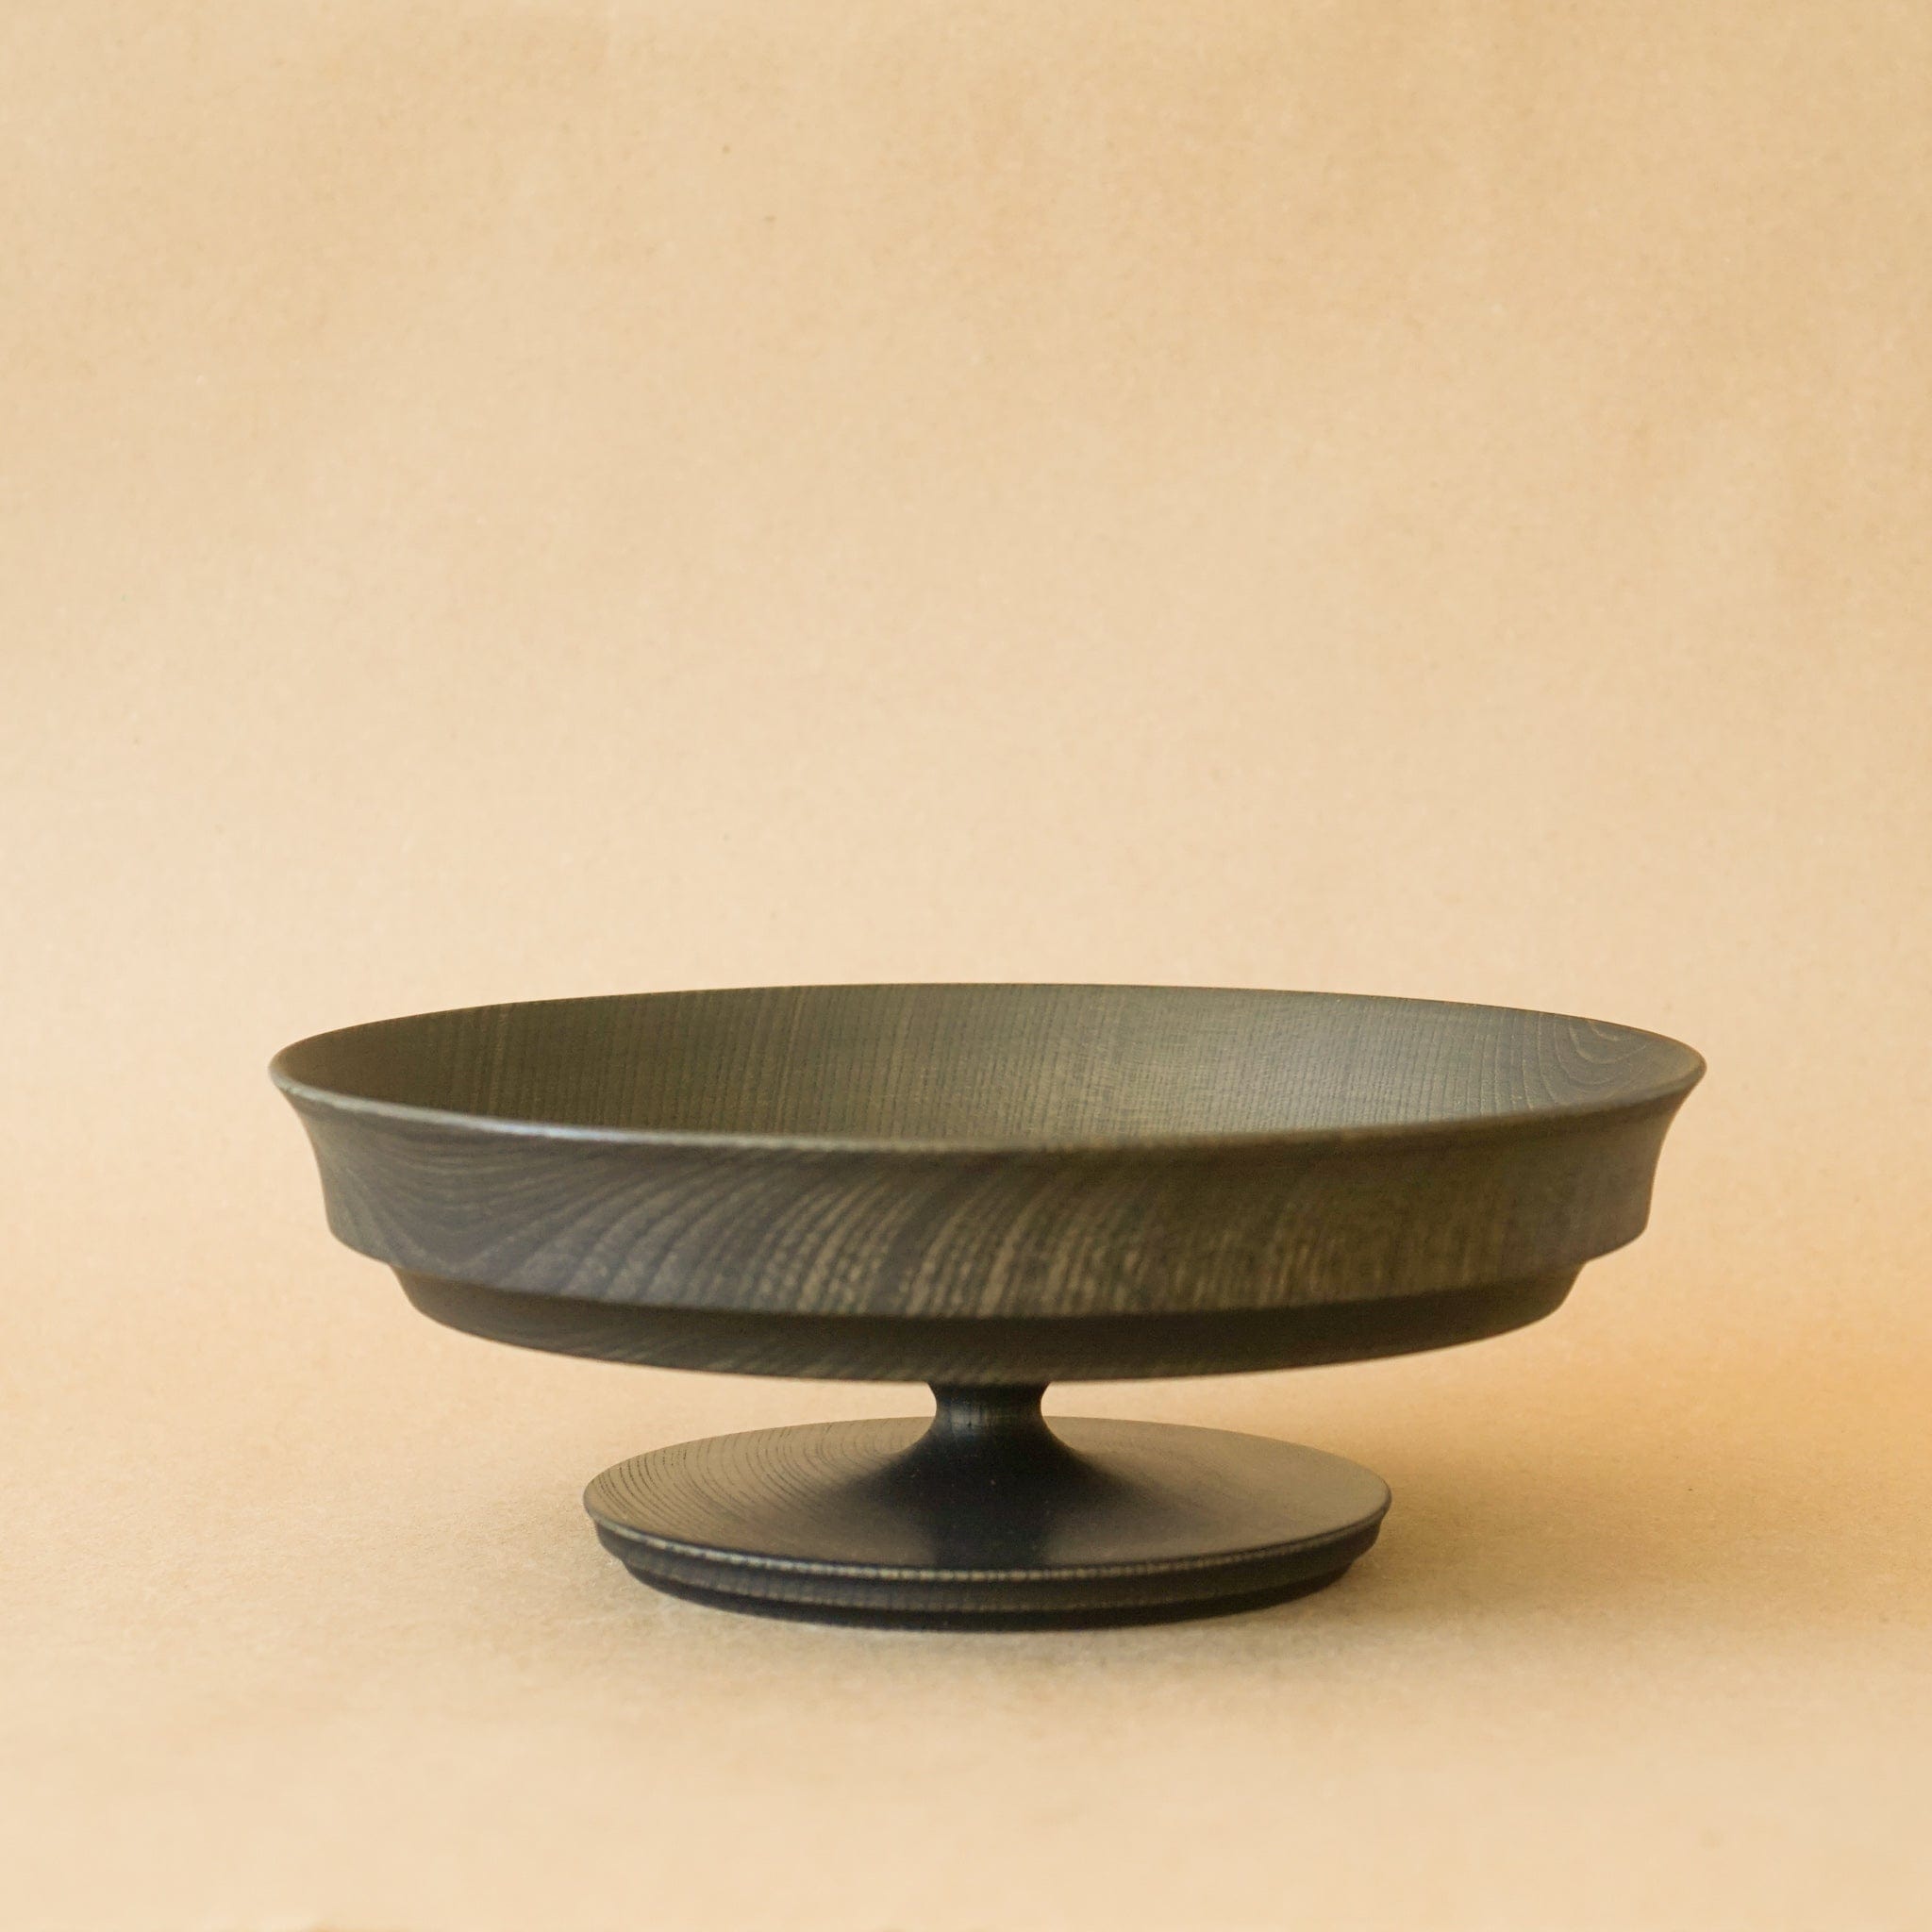 Morihata Decor Black / Large Sinafu 6.0 Pedestal Stand Bowl in Black